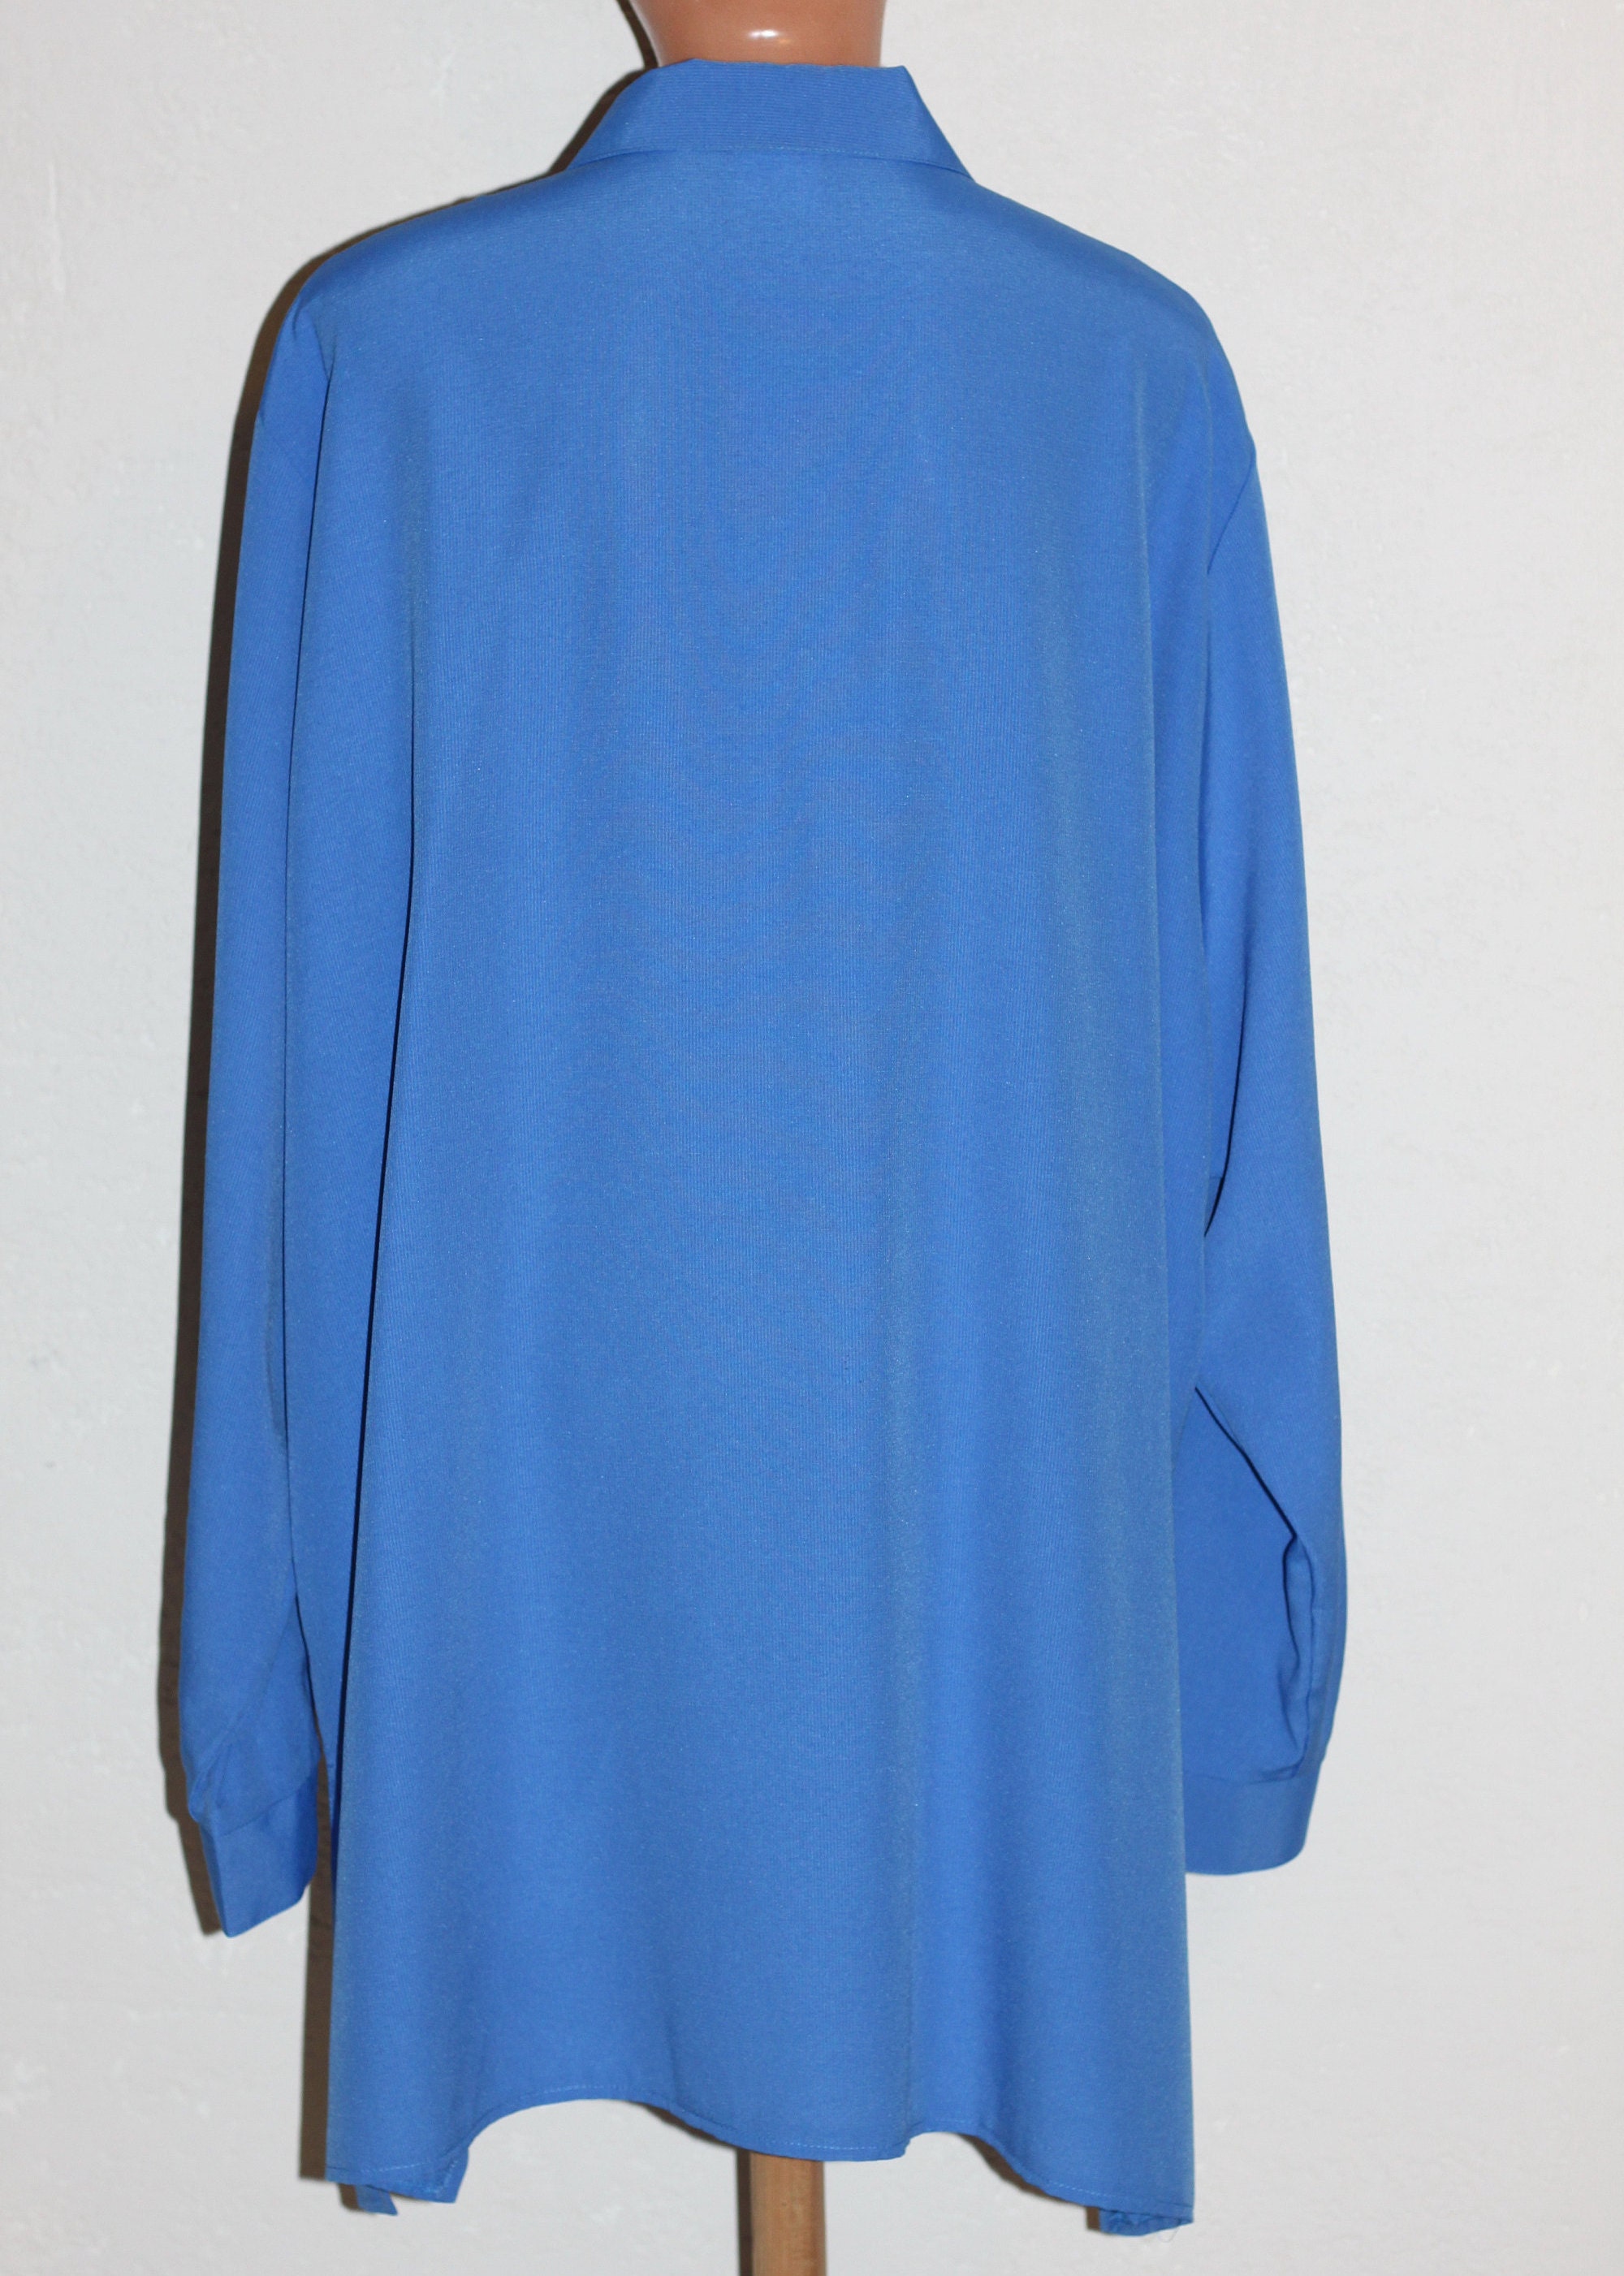 Vintage 90s Royal Blue Viscose Long Sleeve Blouse Plus Size - Etsy